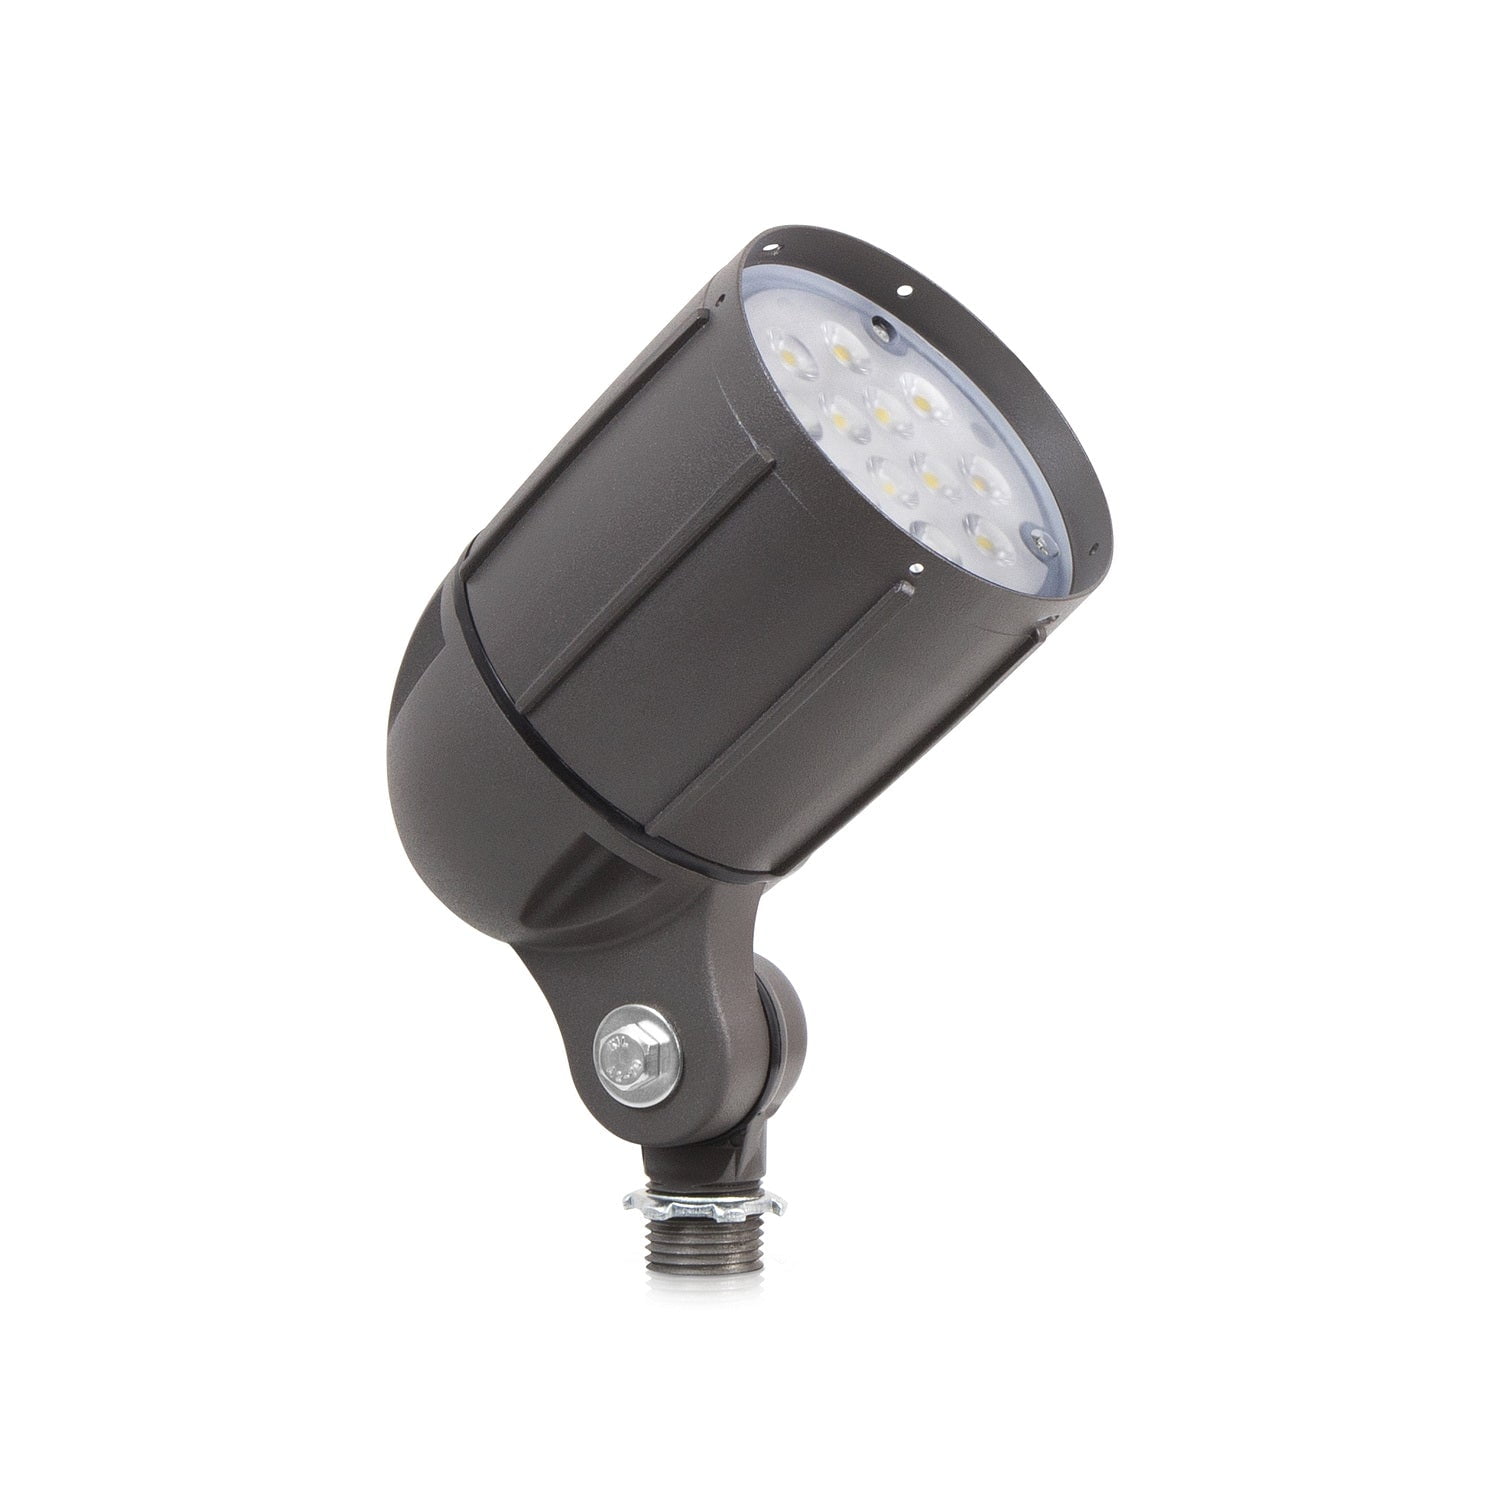 Leonlite LED Motion Sensor Security Light Review: Versatile